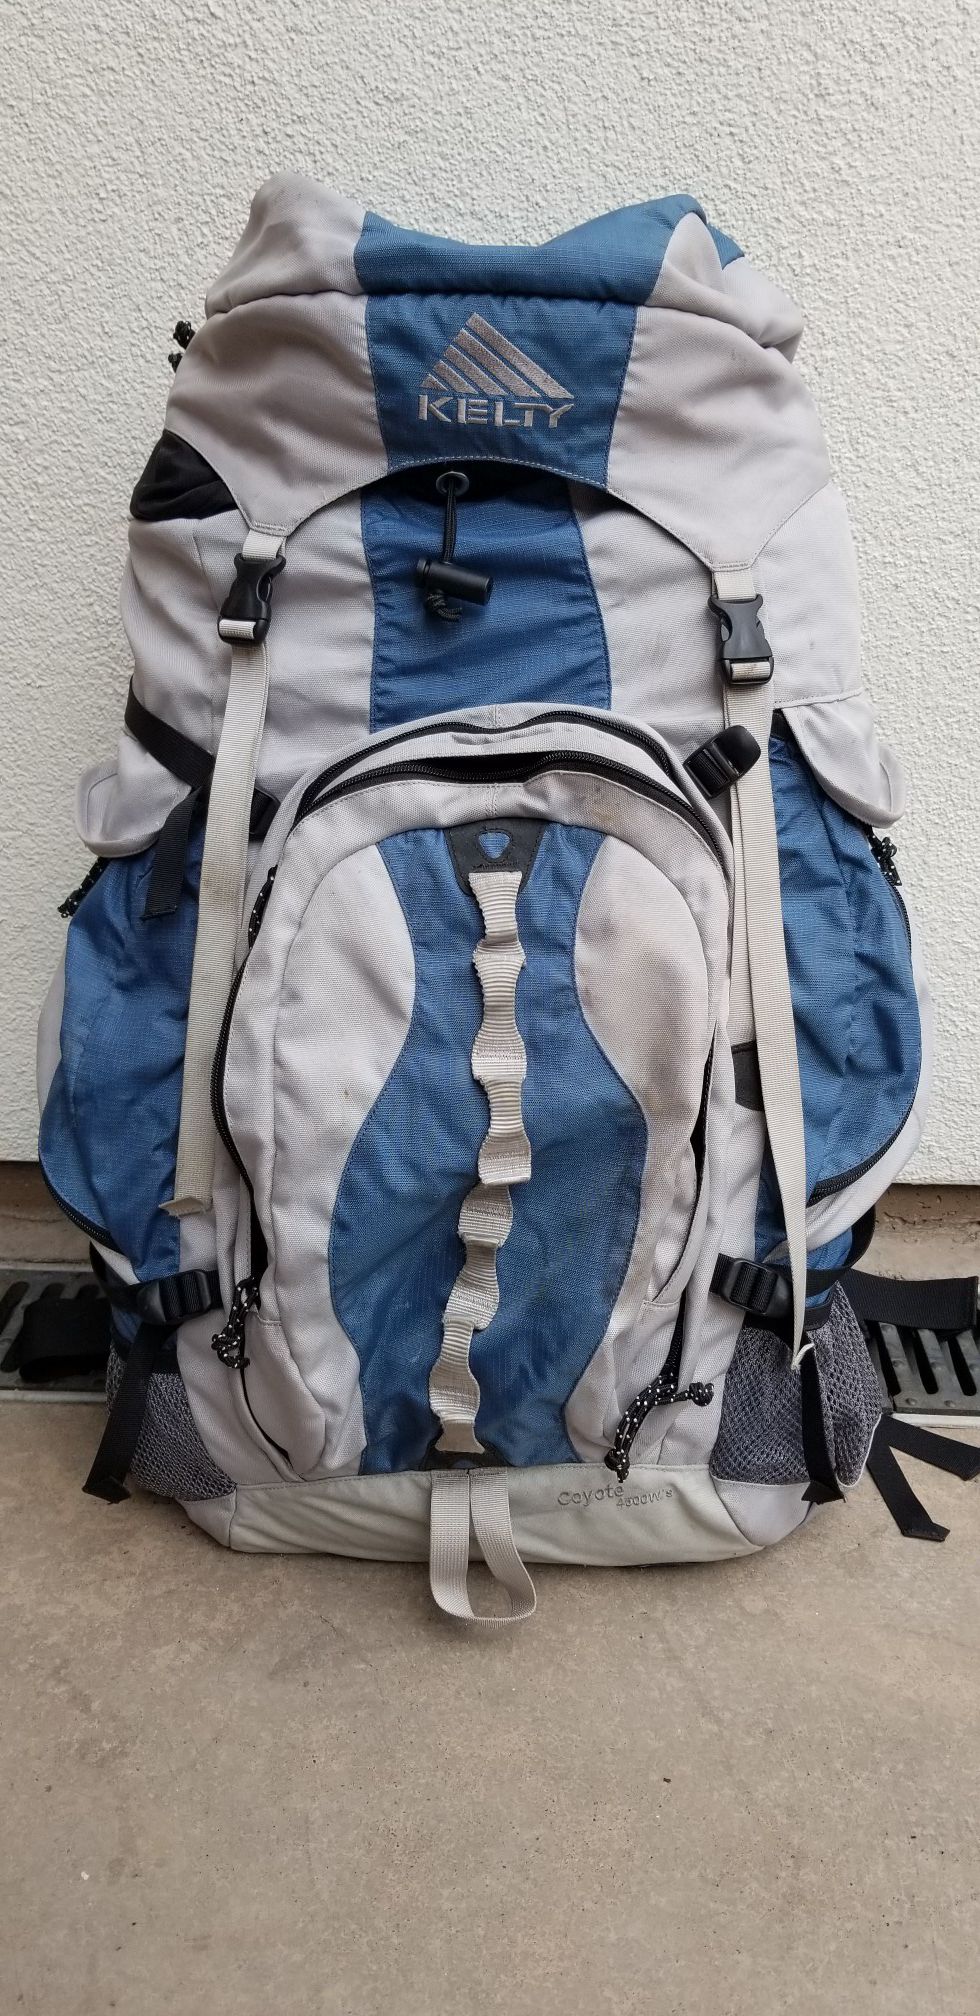 Kelty Coyote 4500 WS backpack - women's